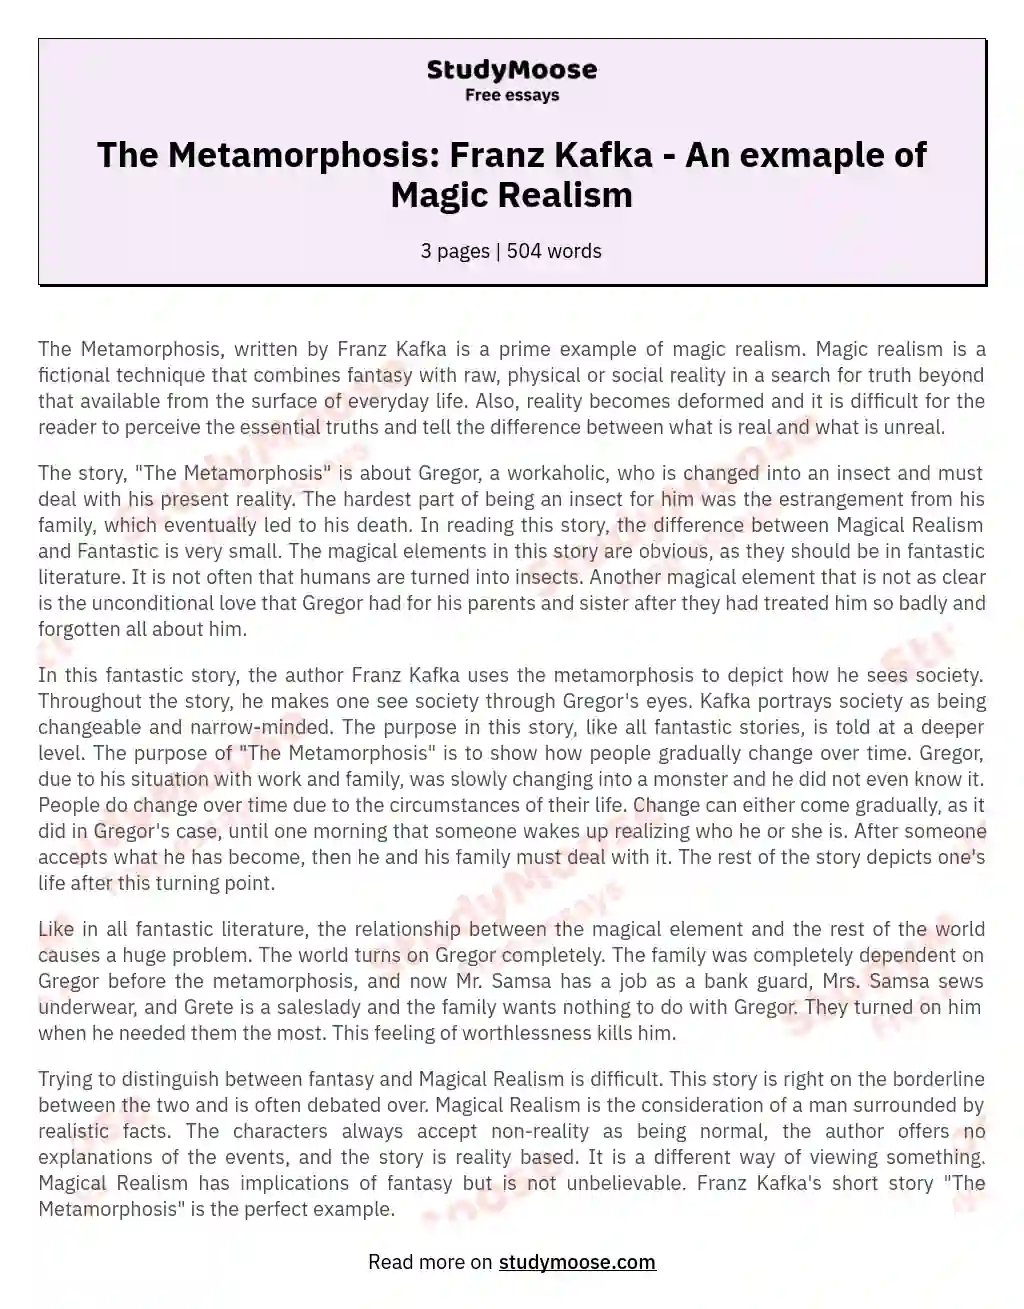 The Metamorphosis: Franz Kafka - An exmaple of Magic Realism essay